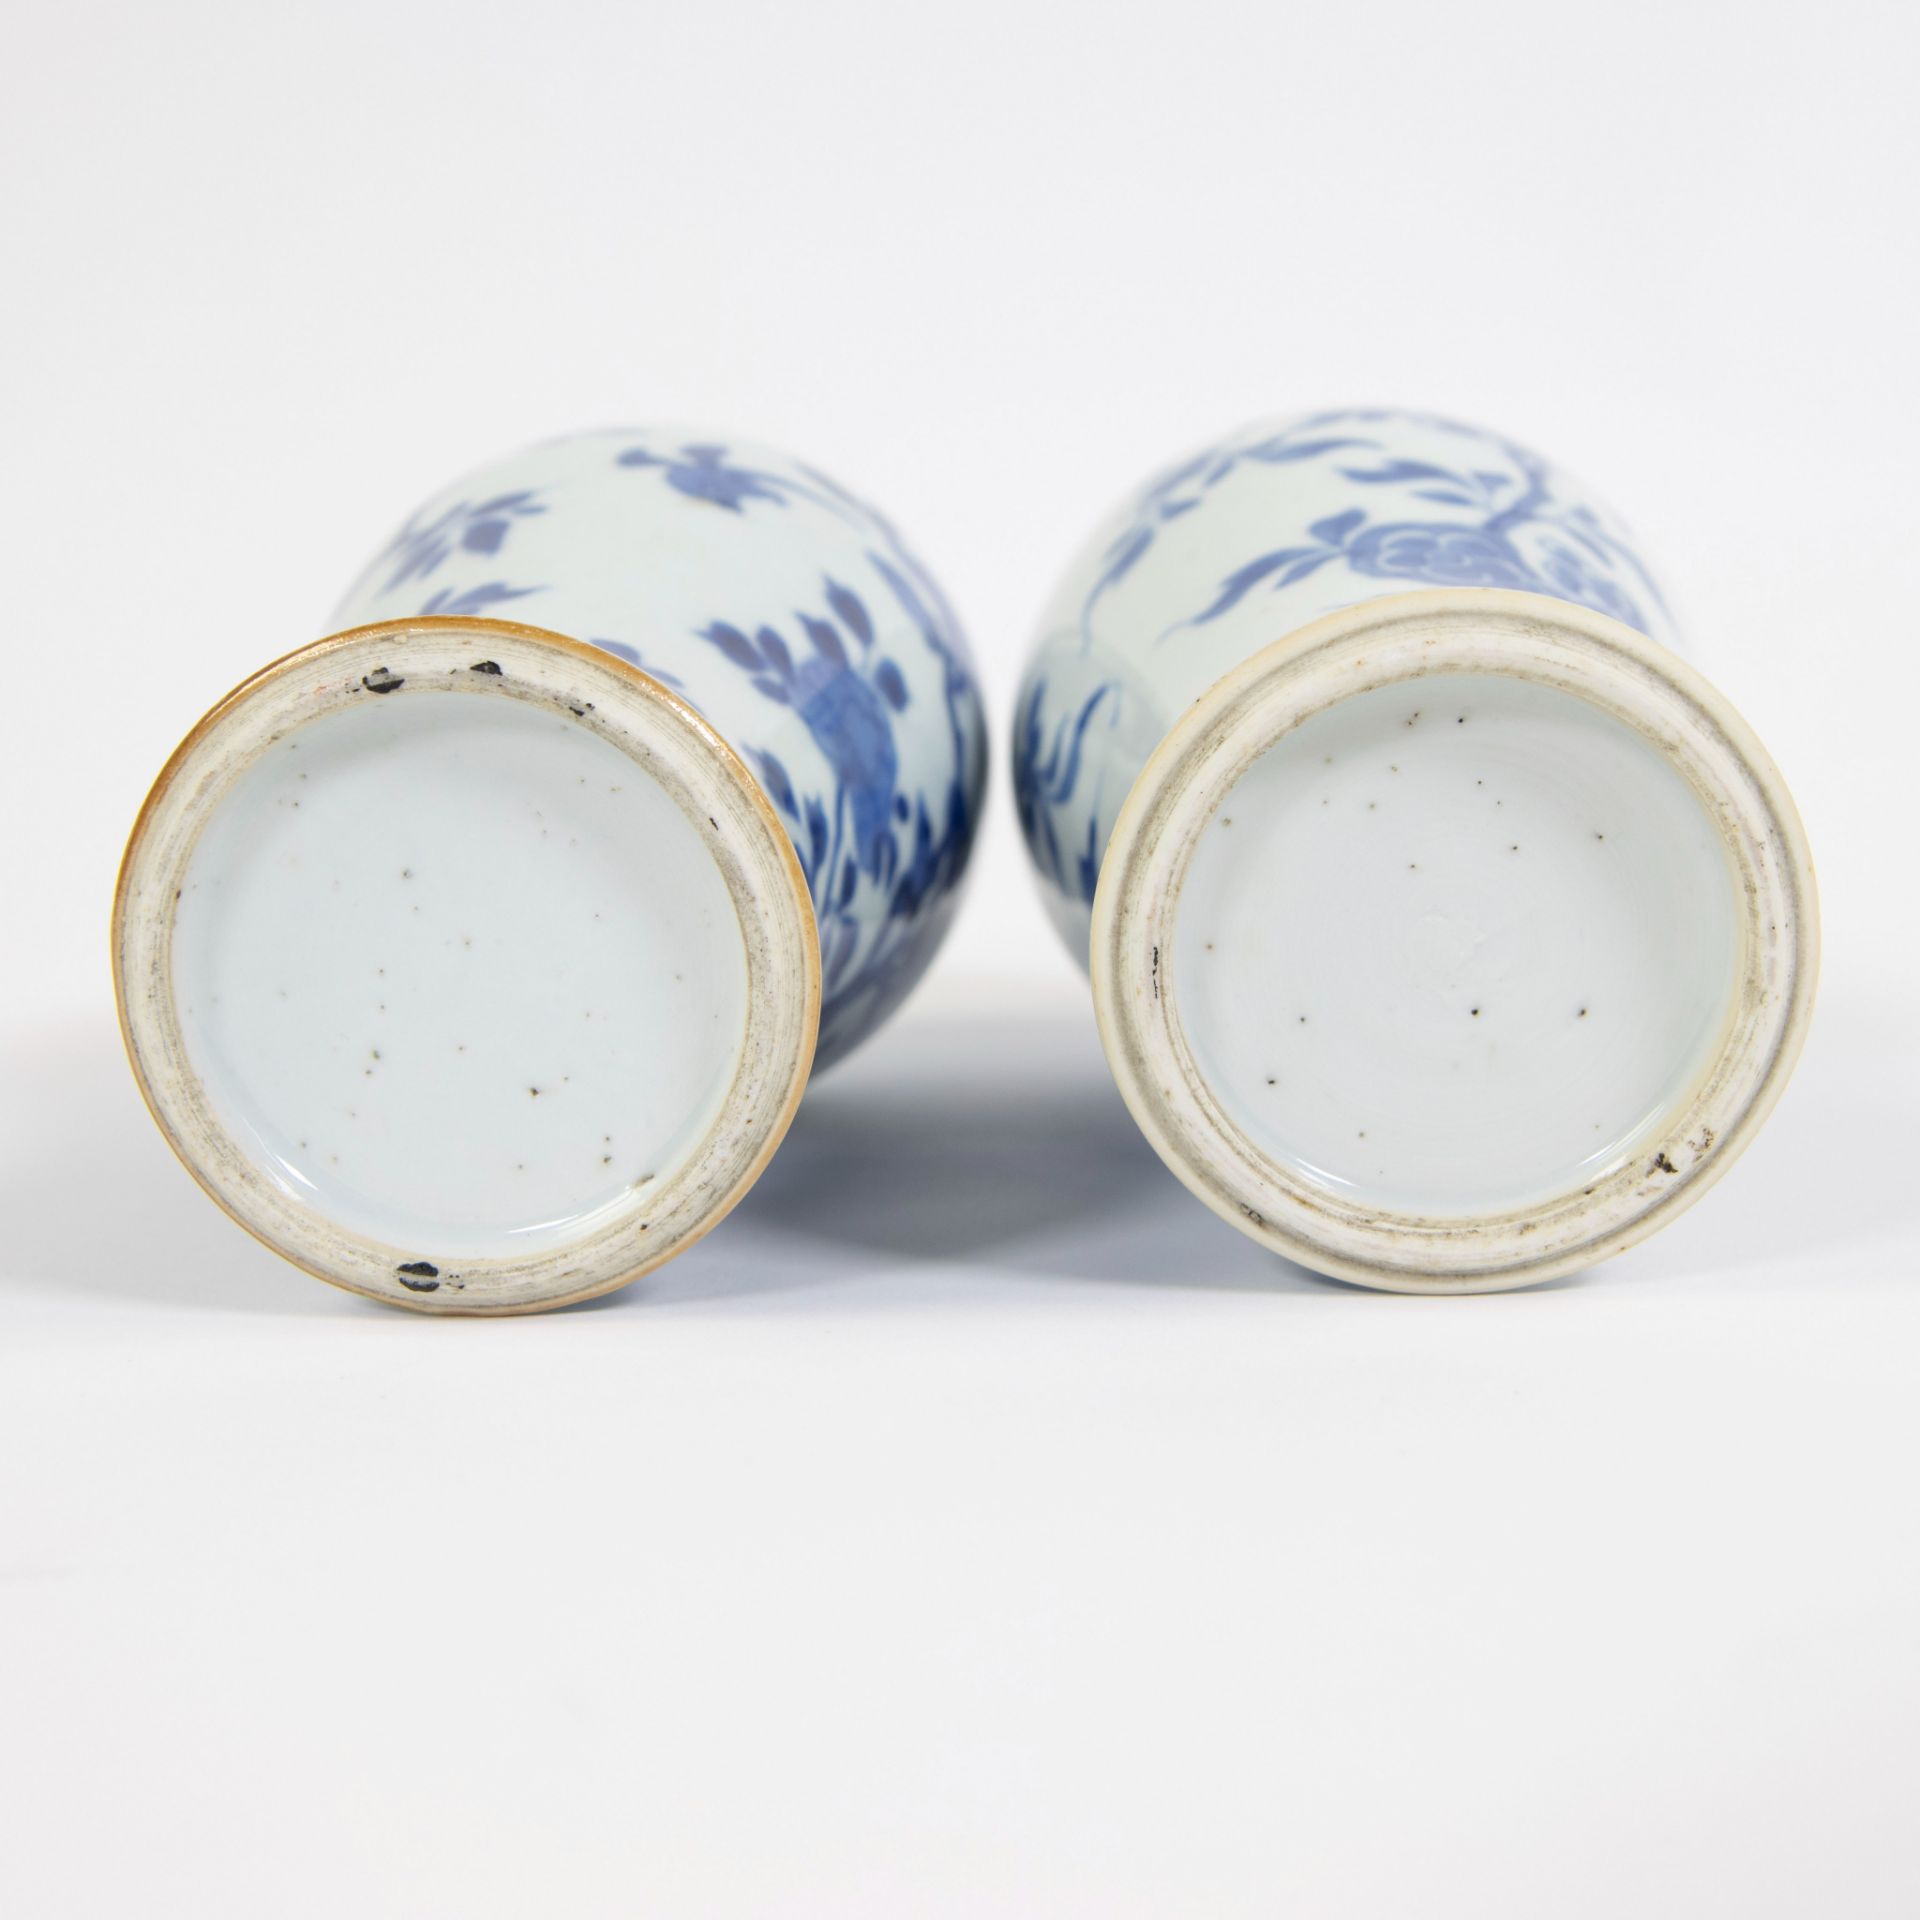 Two Kangxi porcelain vases, China, early 18th century - Image 6 of 6